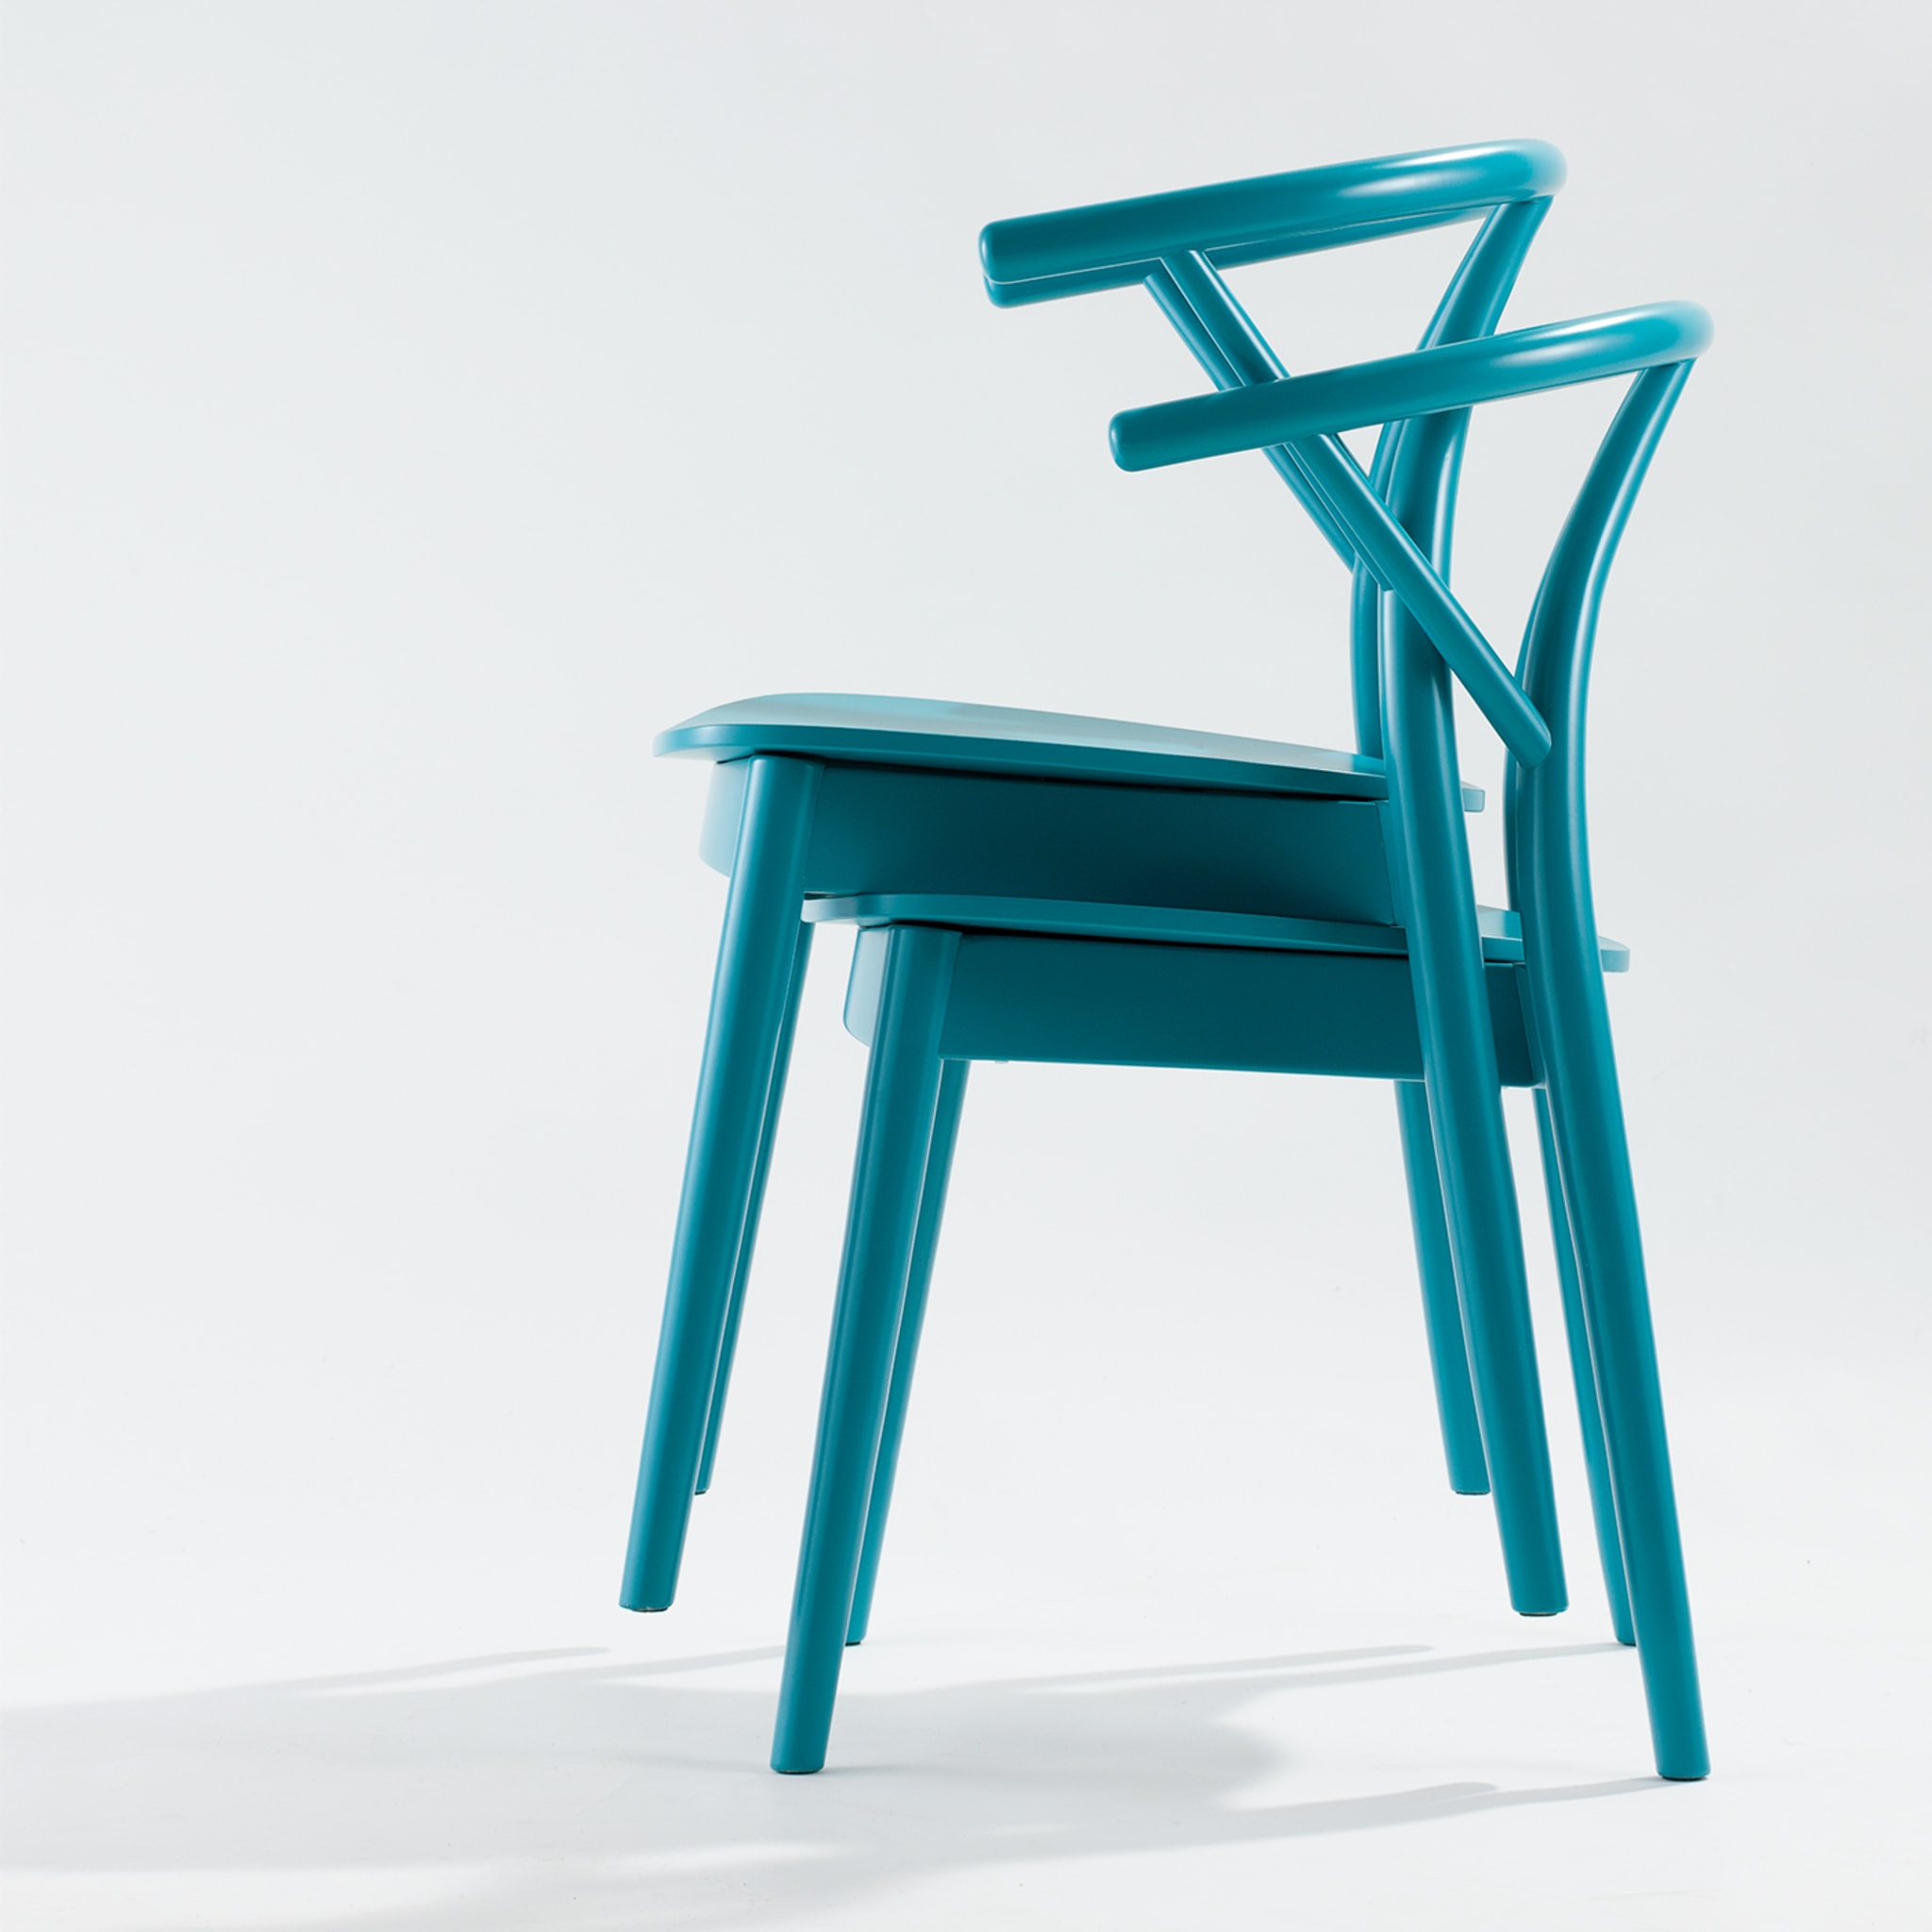 Yelly 971 Light Blue Chair by Markus Johansson - Alternative view 2